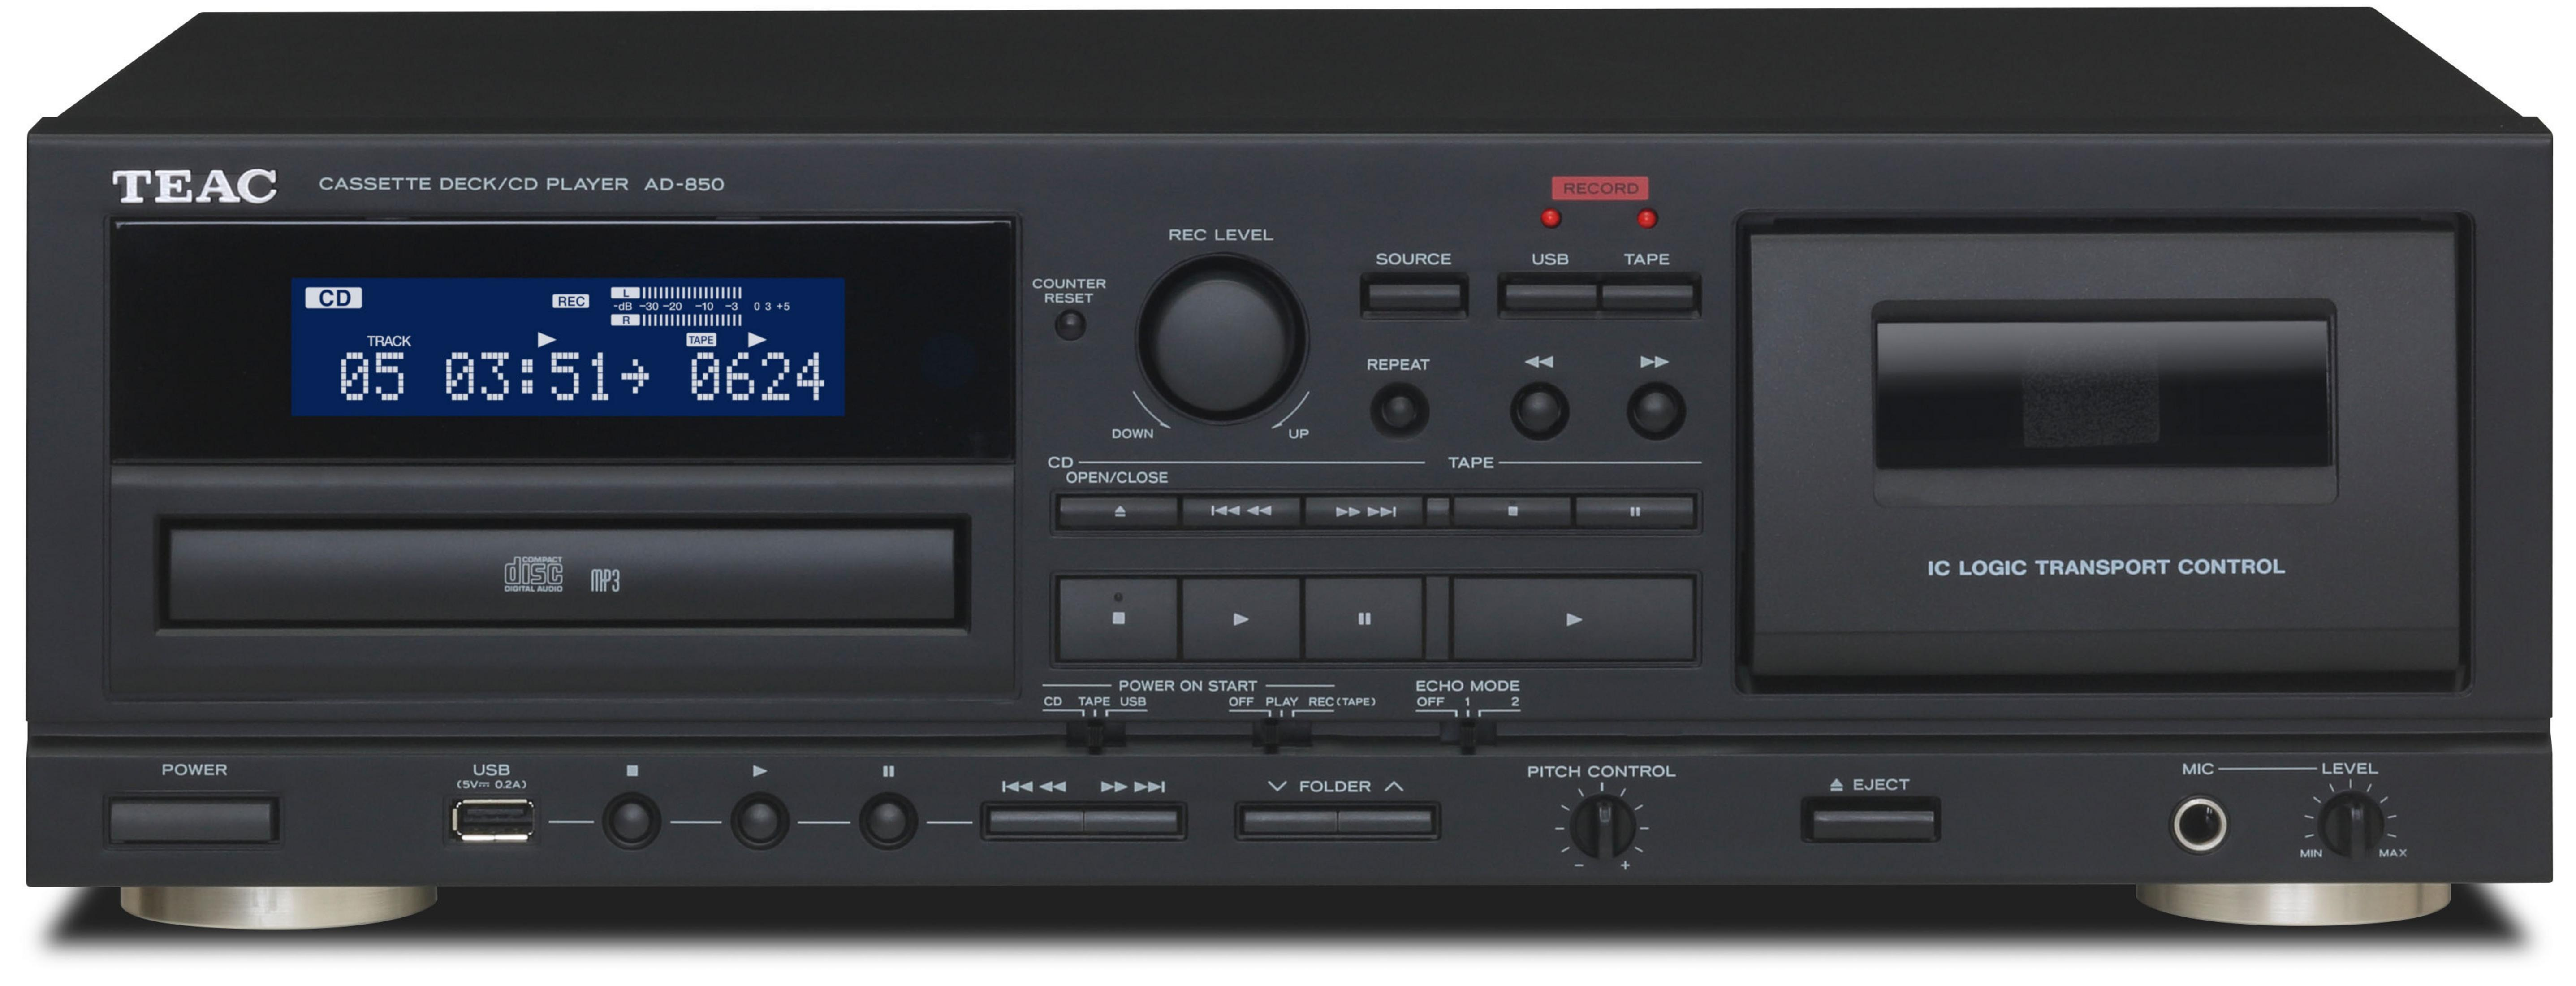 Schwarz TEAC 850 AD CD-Player/Kassendeck-Kombination,